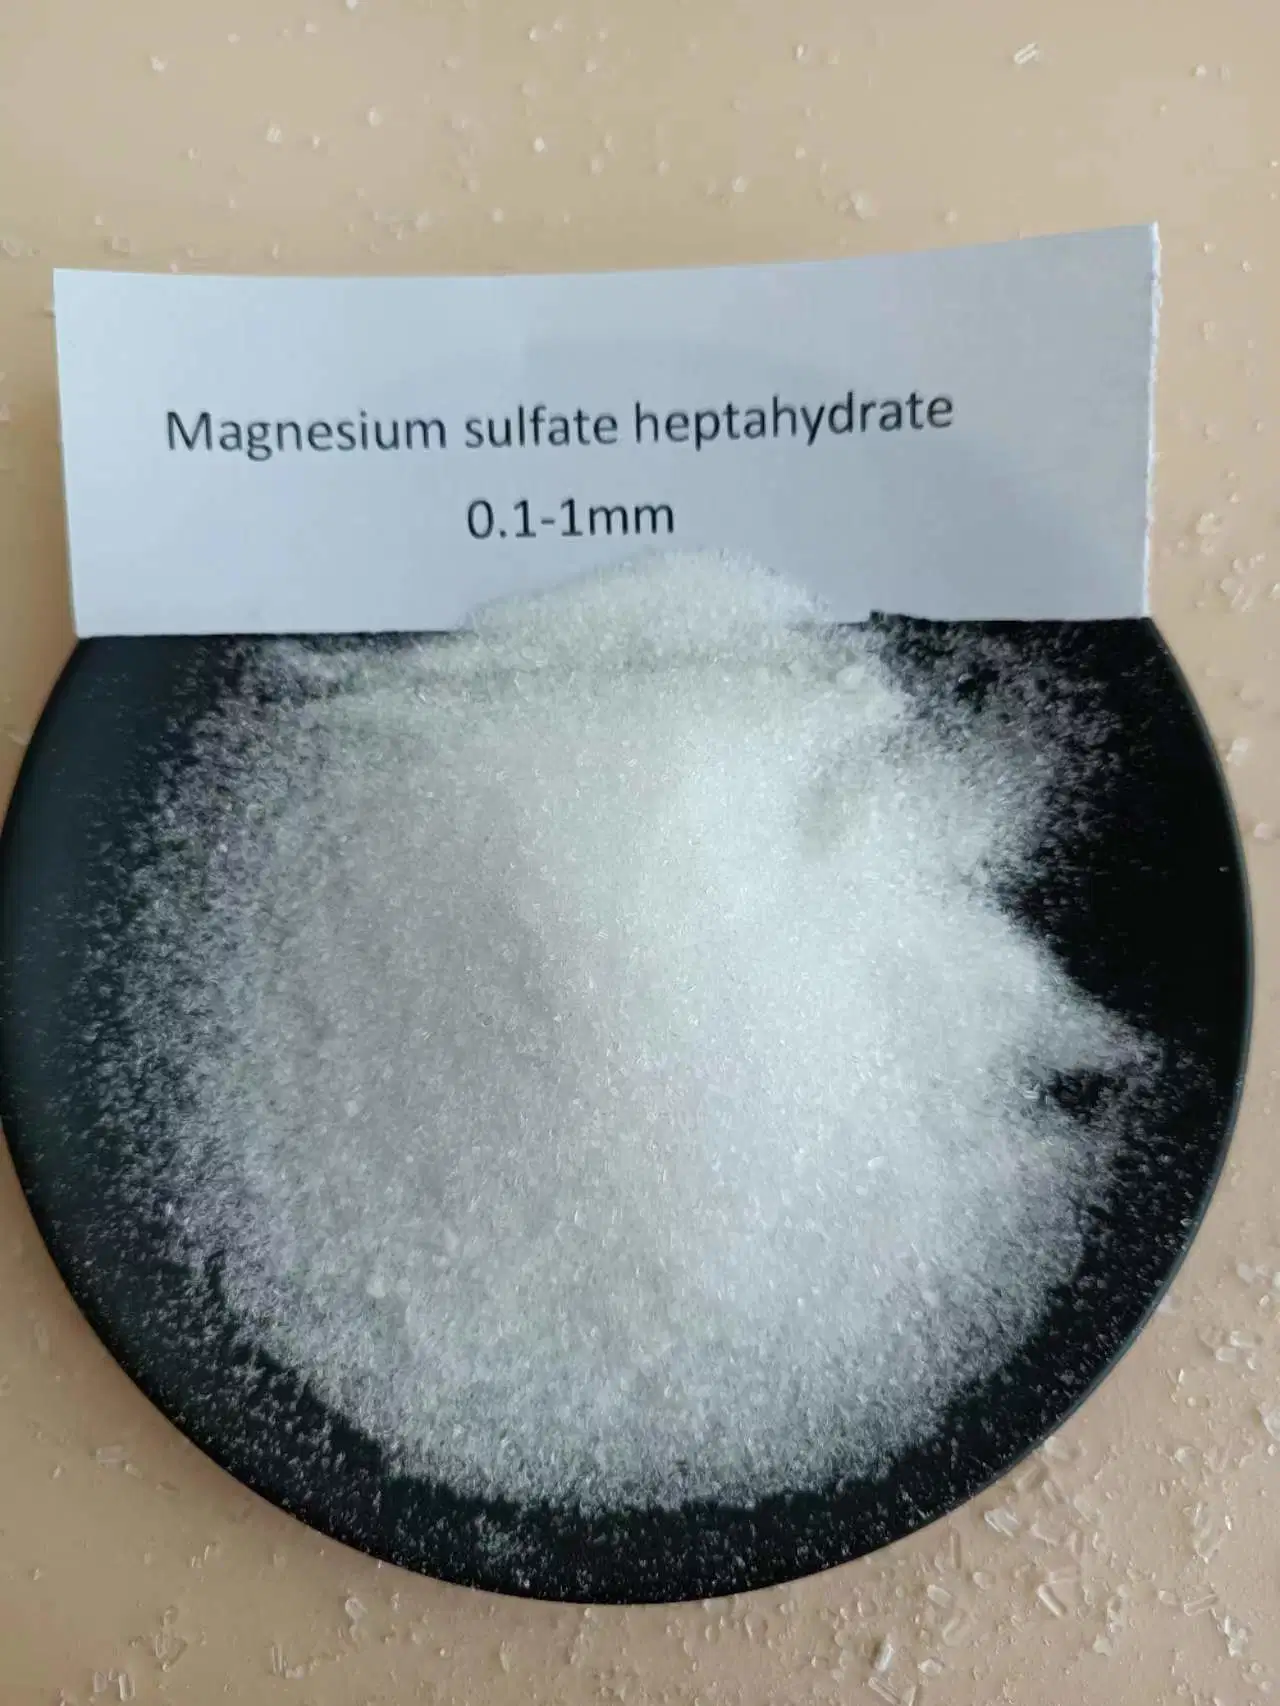 Сульфат магния Heptahydrate Mgso4.7H2O производитель Сульфат магния Heptahydrate для внесения удобрений